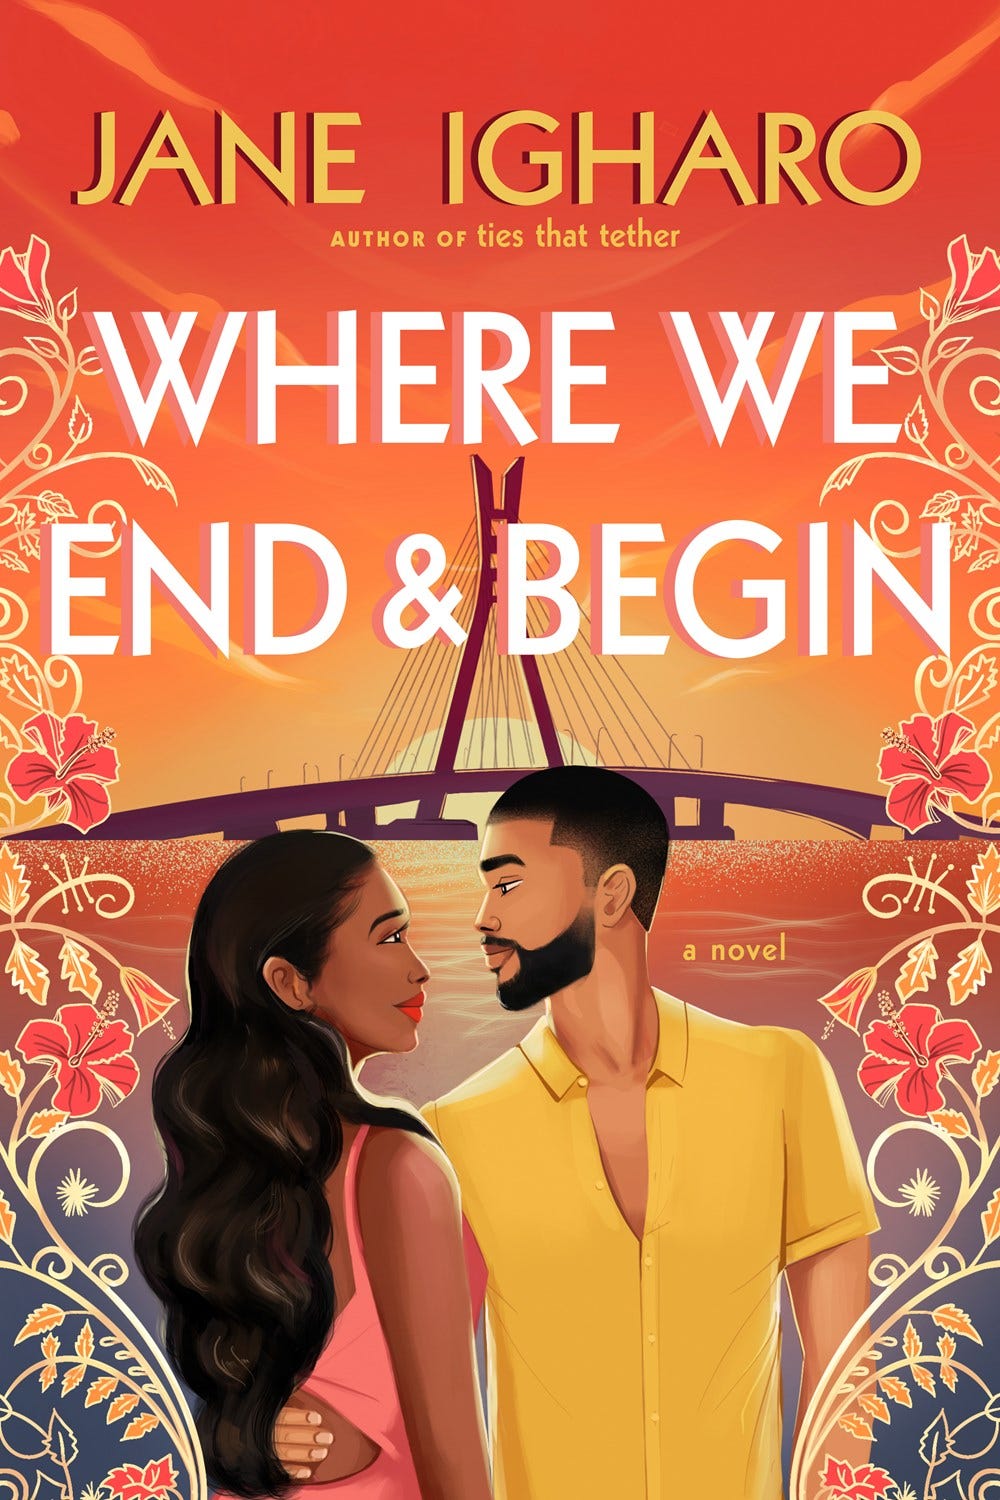 Where We End & Begin by Jane Igharo | Goodreads